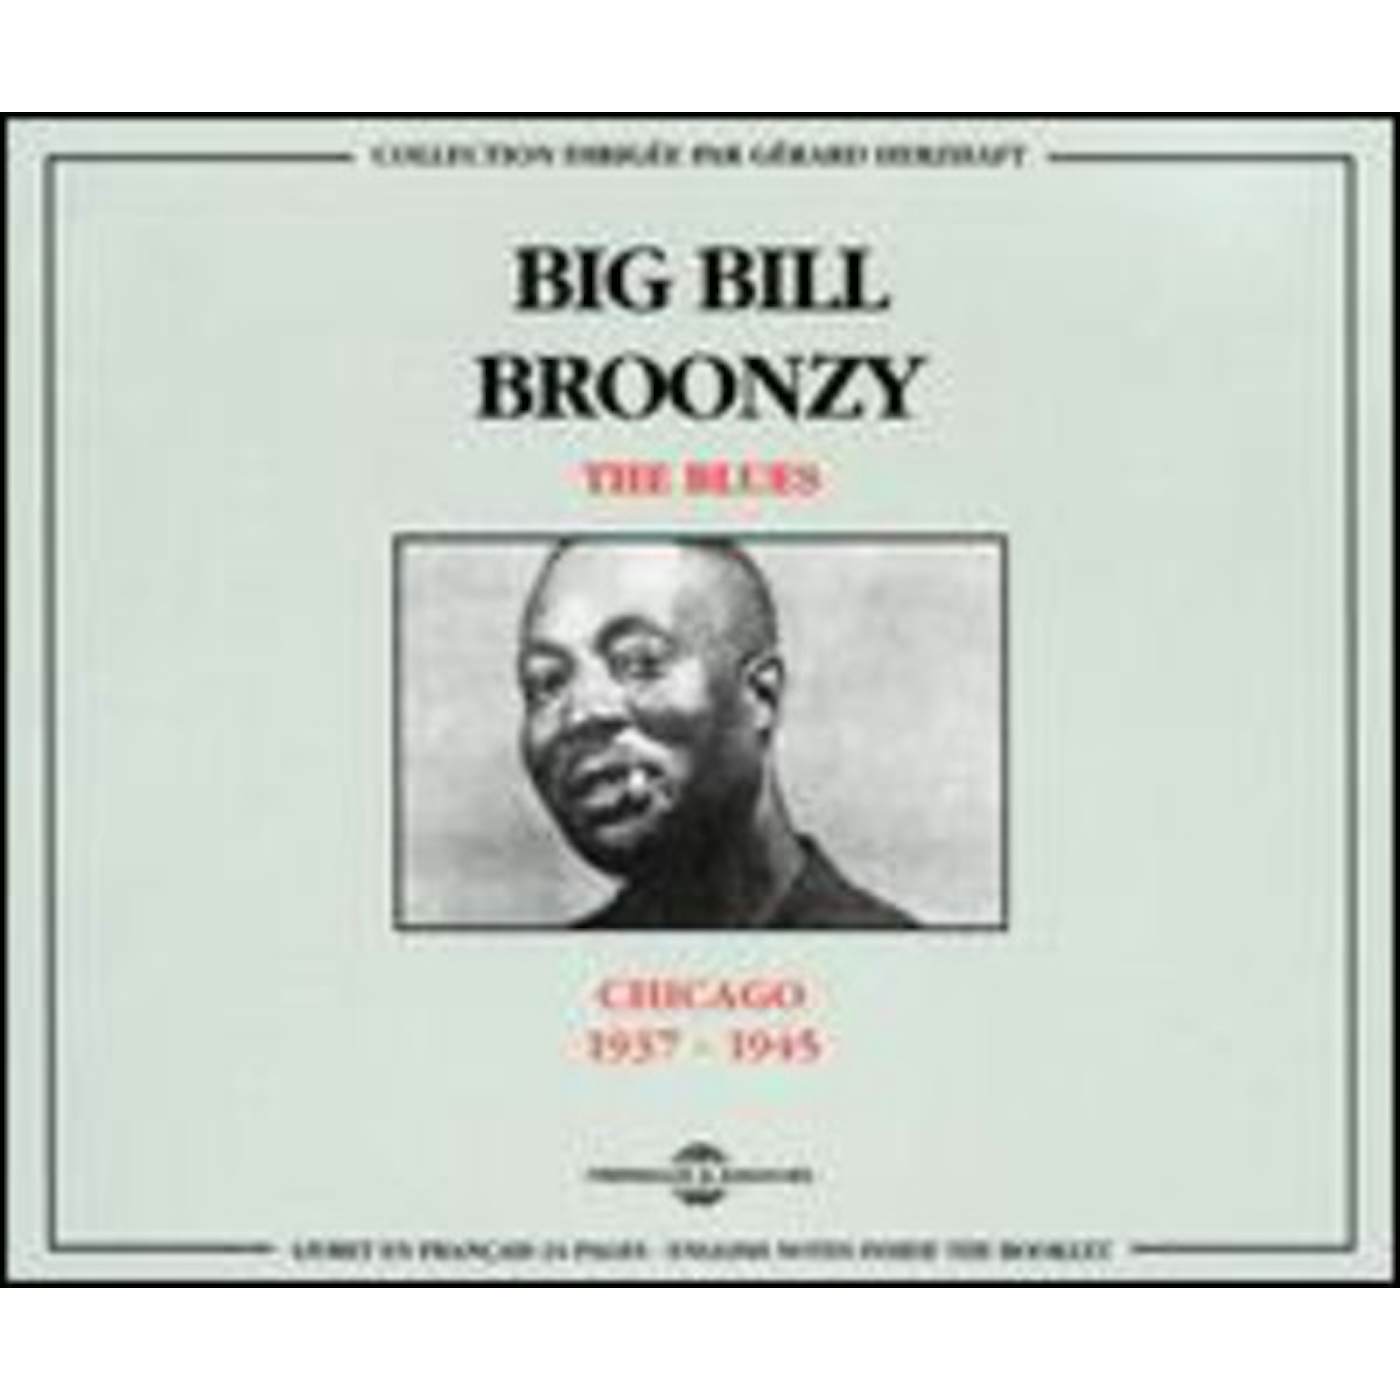 Big Bill Broonzy CHICAGO 1937-1945 CD